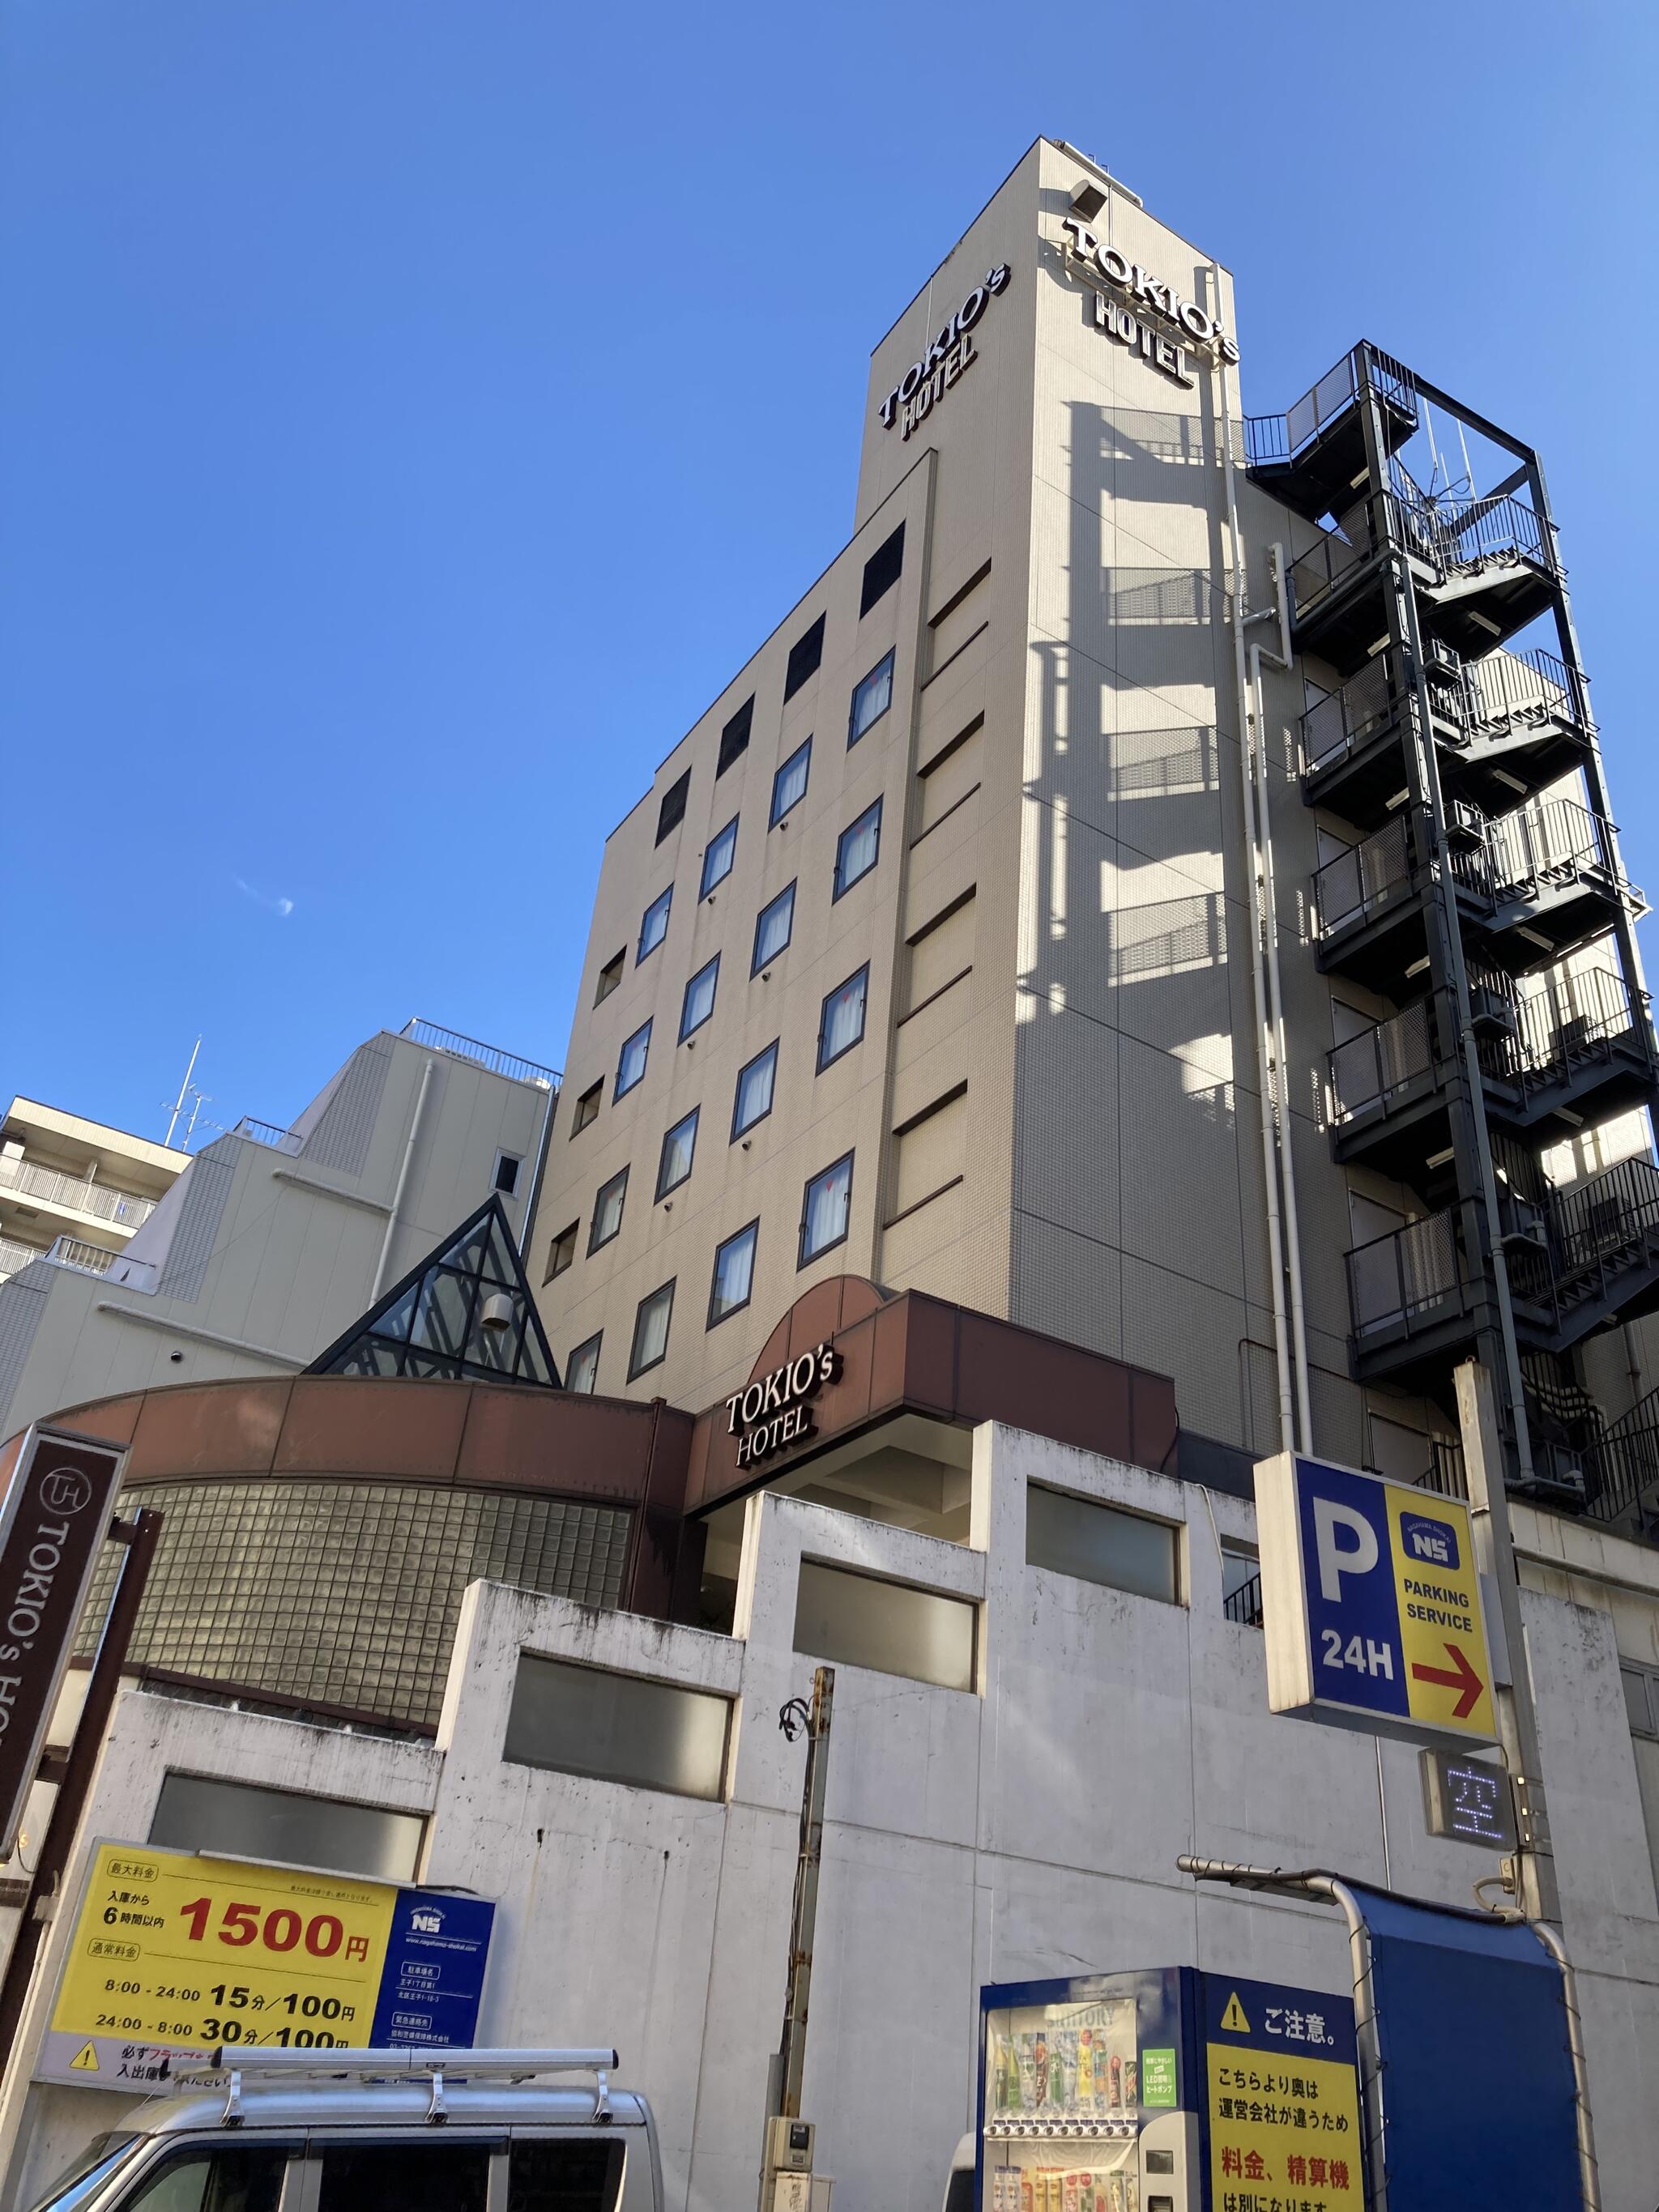 TOKIO’sHOTELの代表写真3